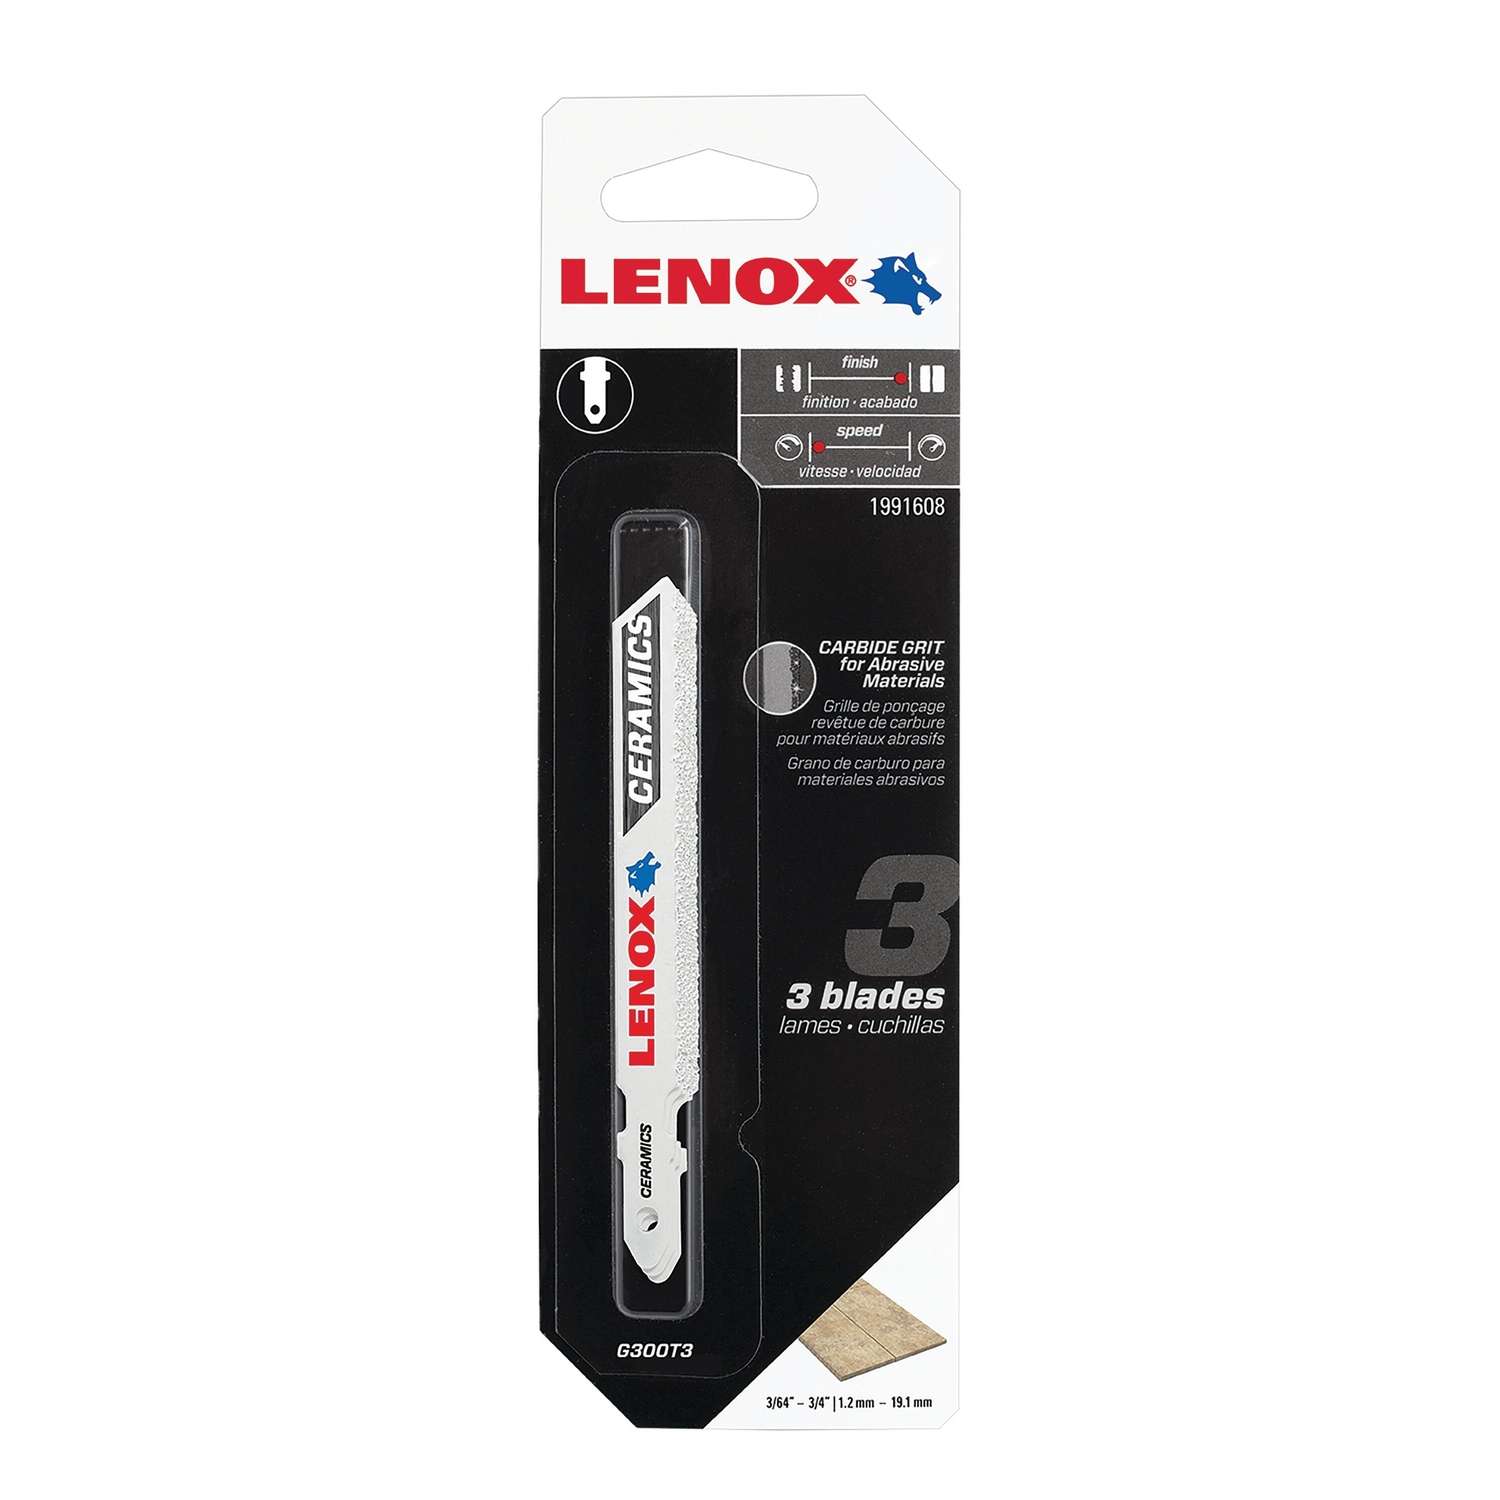 Lenox 31/2 in. Carbide Grit TShank Jig Saw Blade 3 pk